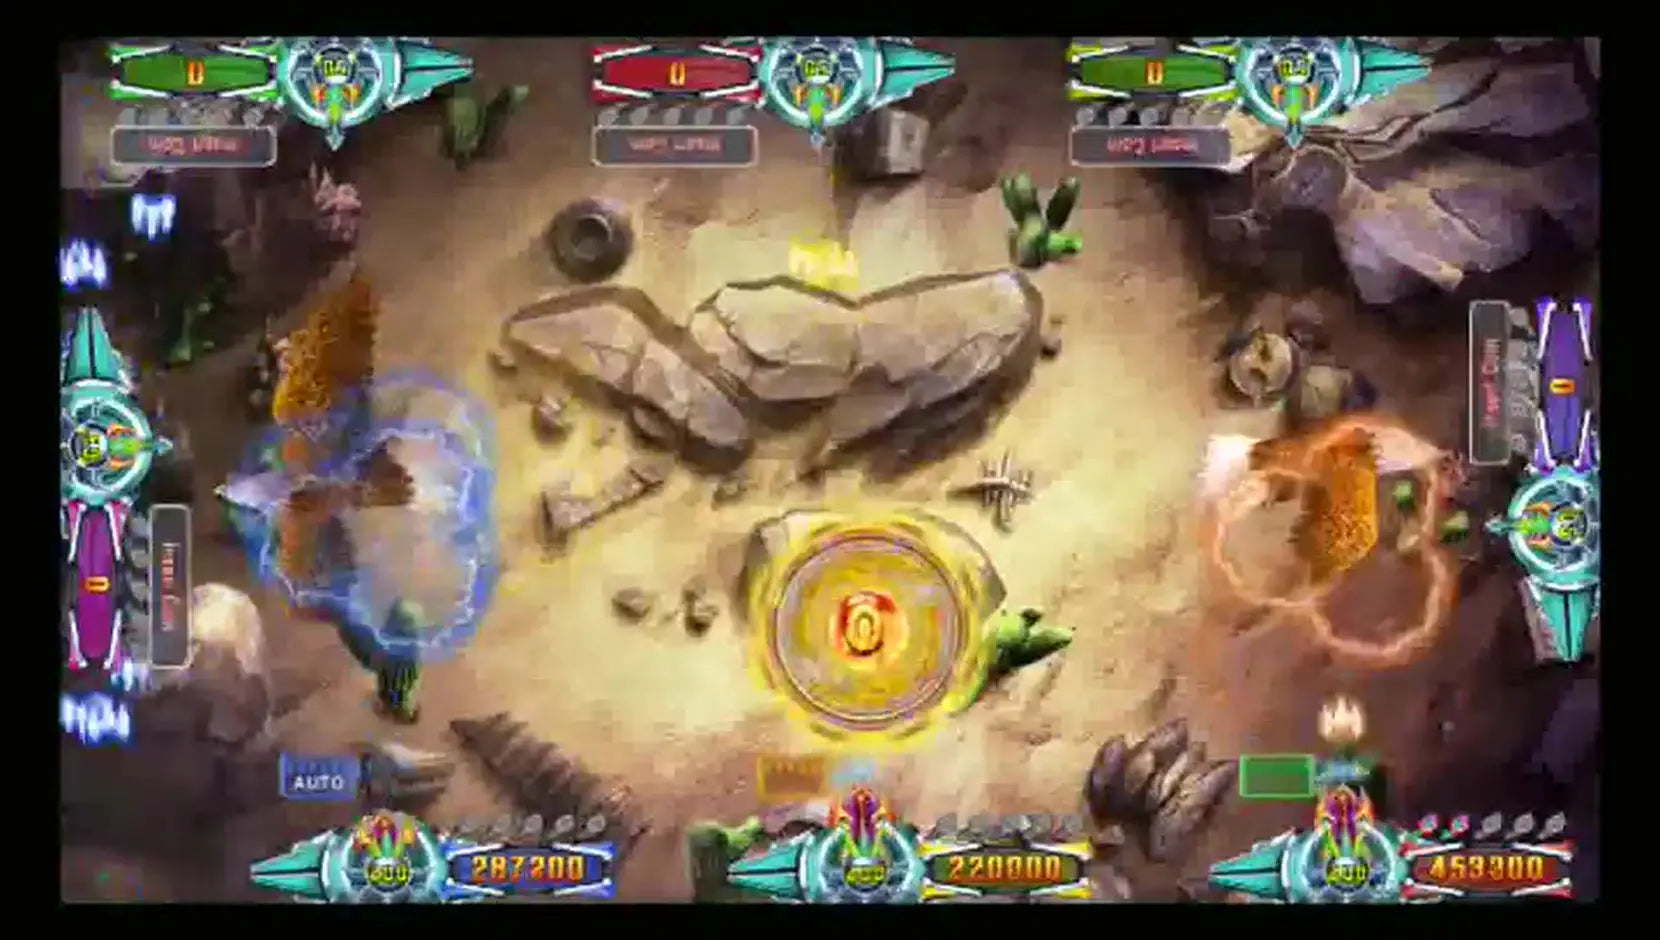 Dragon-vs-Phoenix-Kit-Vgame-US-Hot-Sale-Shooting-Fish-Hunter-fishing-Game-Machine-Tomy-Arcade